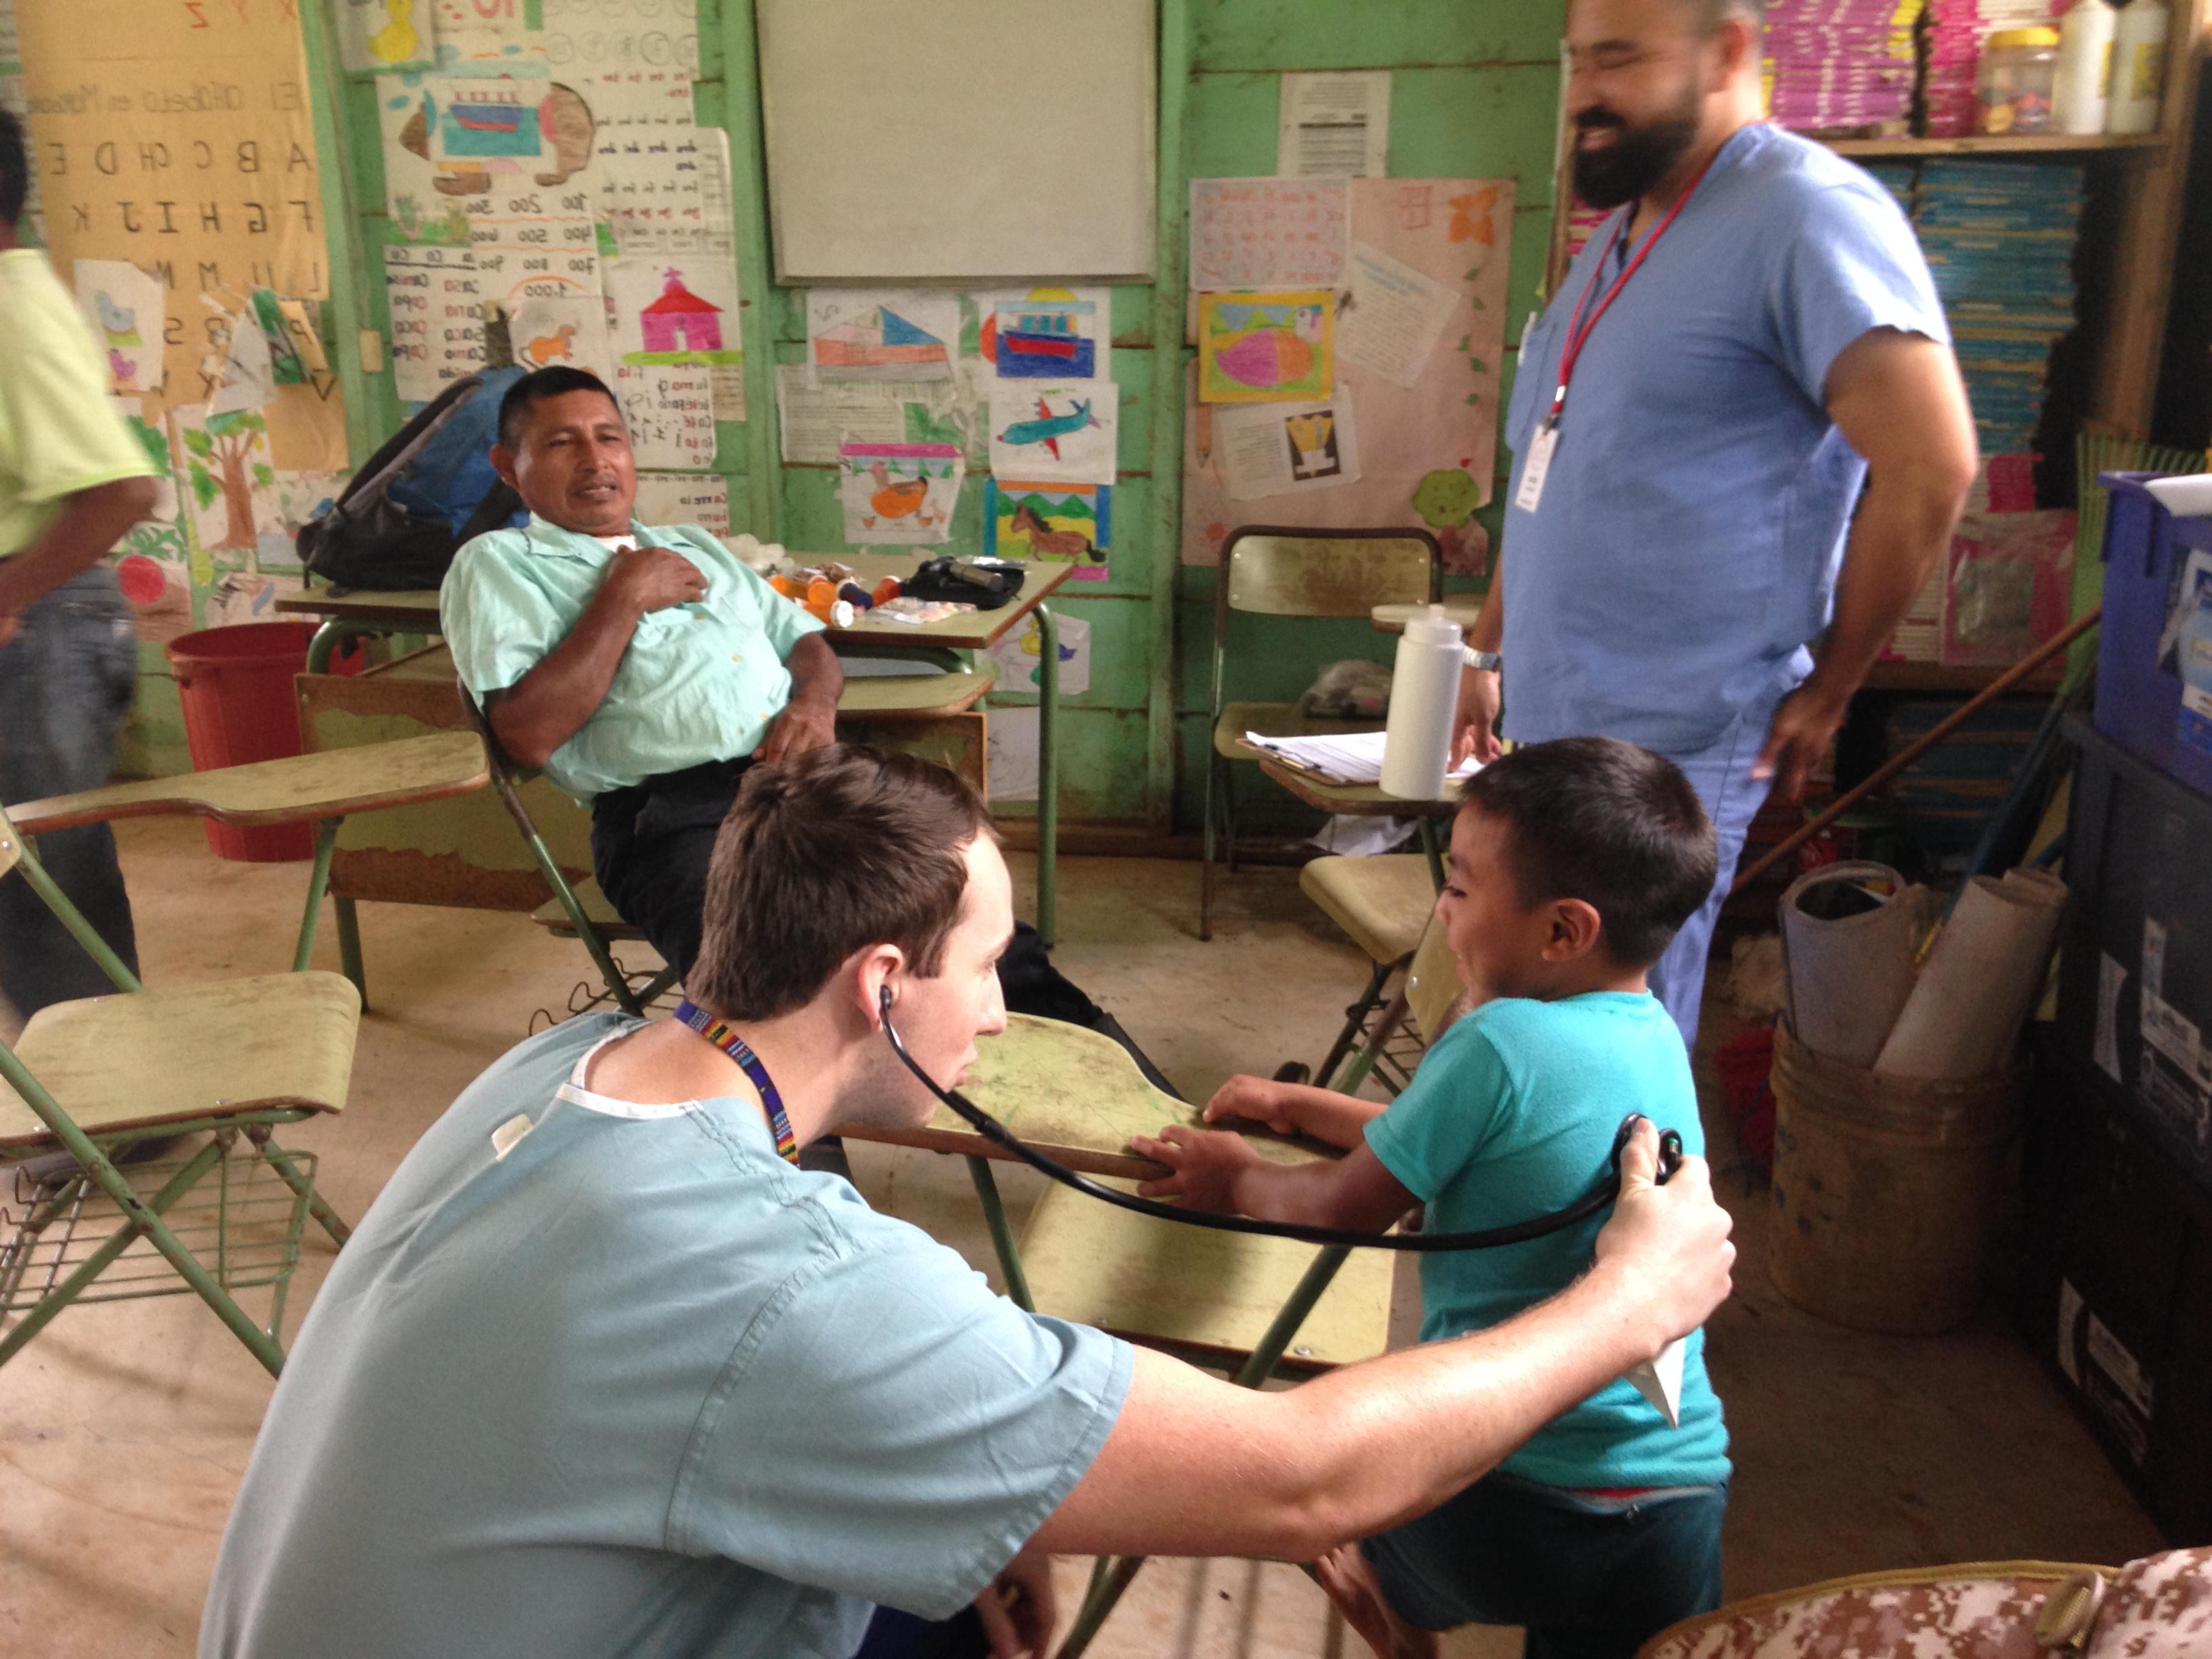 PA student providing care to child in Guatemala